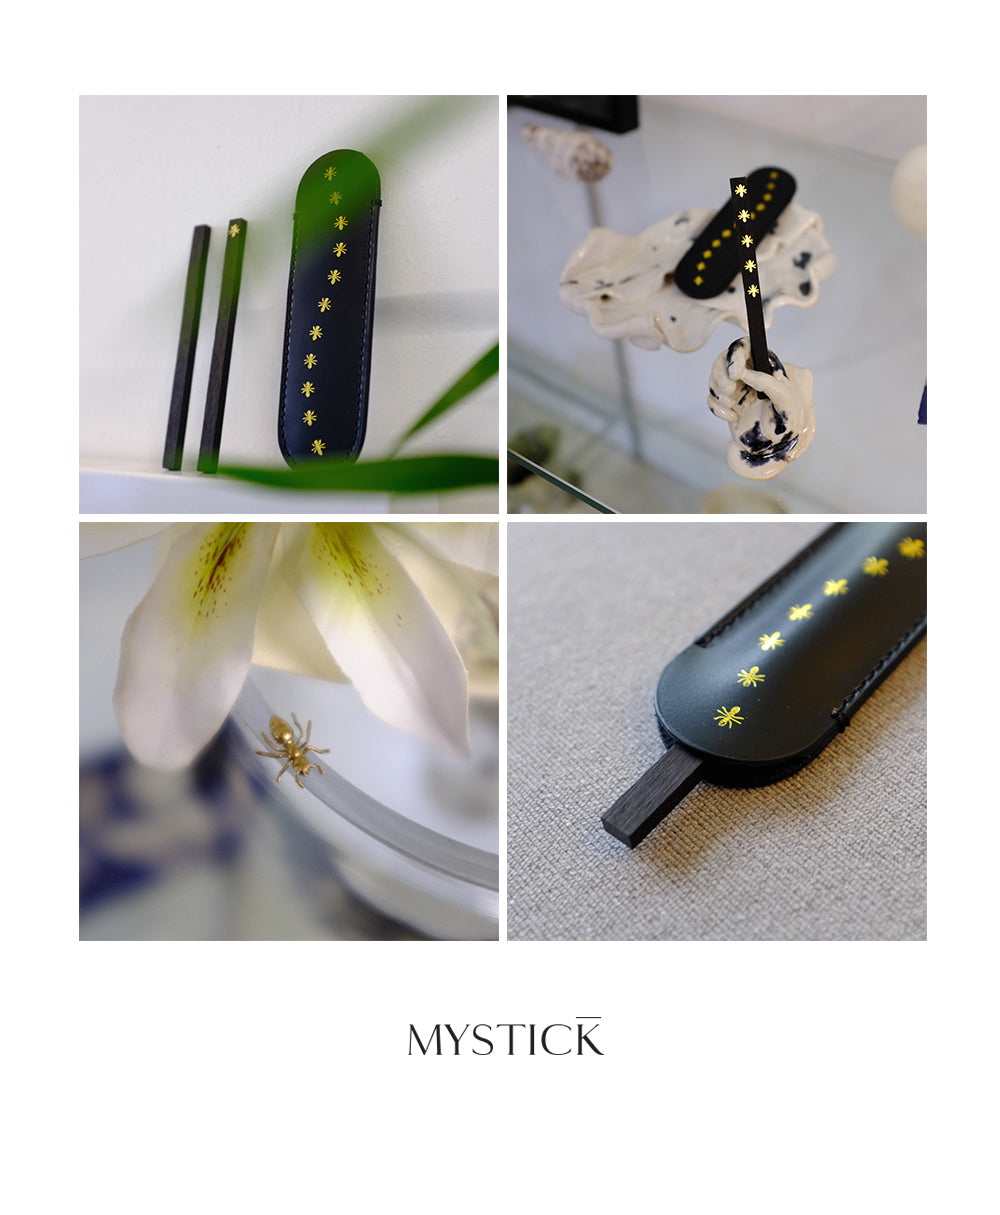 mystick by PH